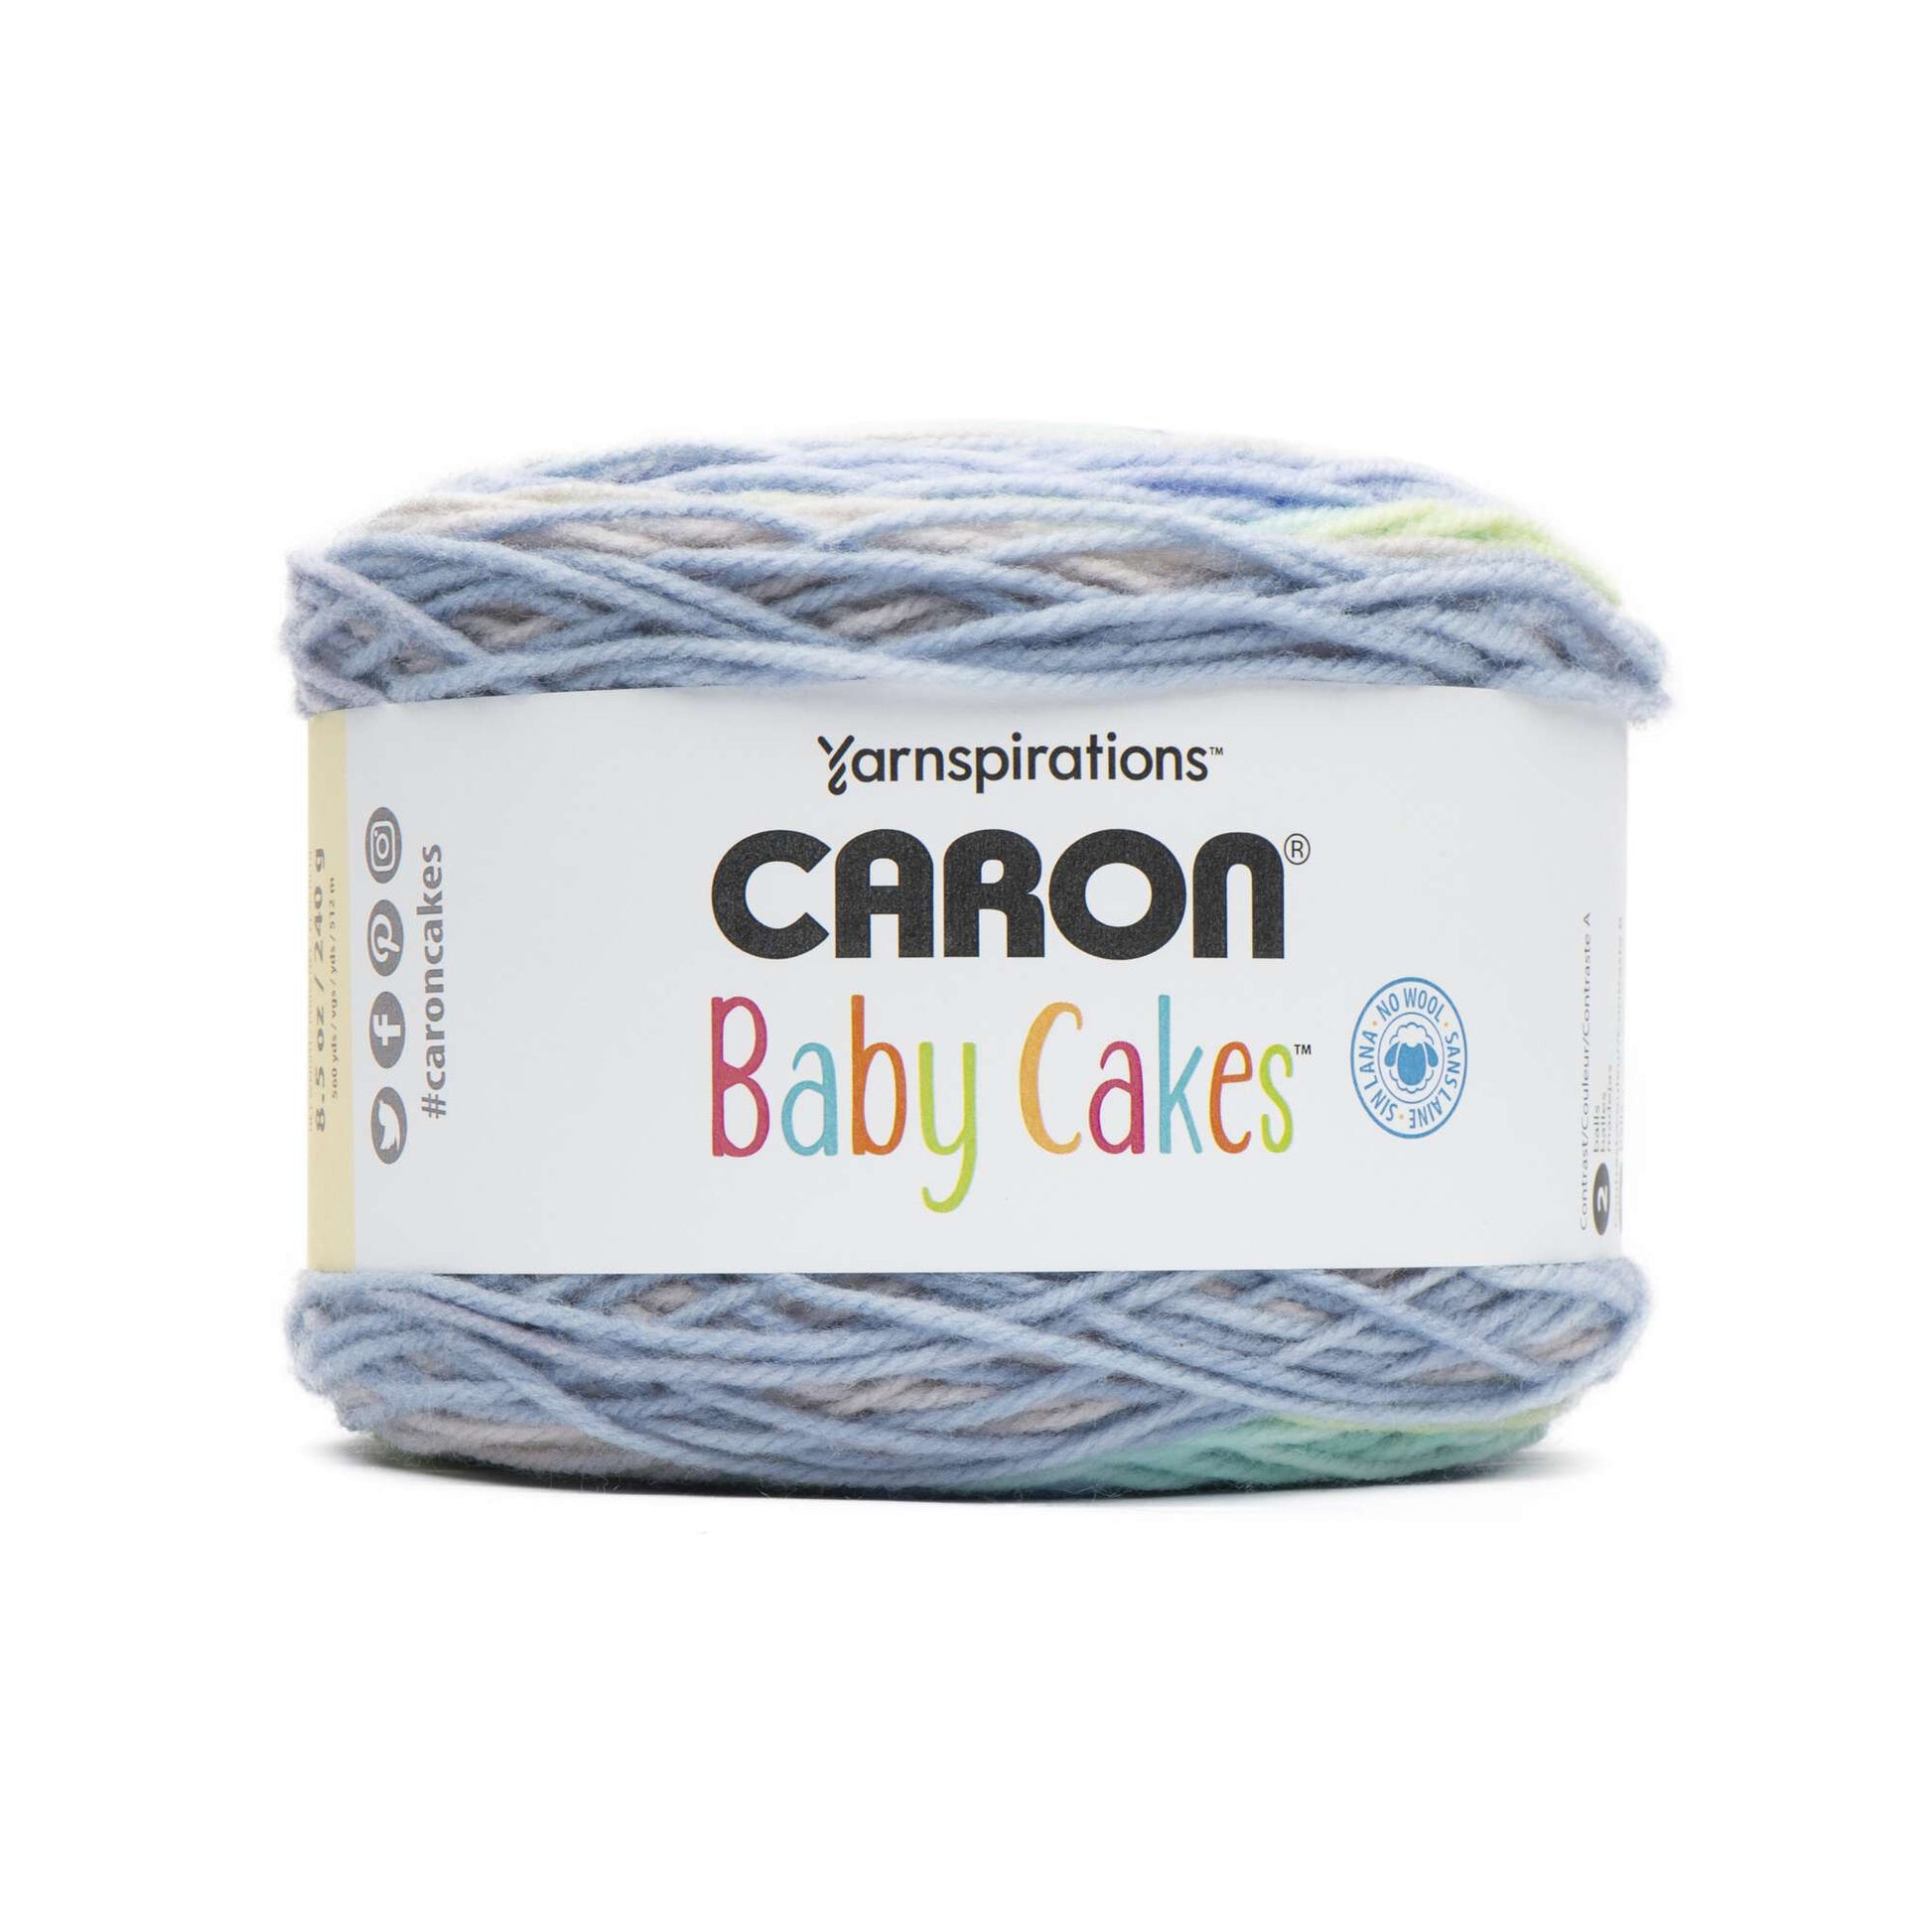 Caron Baby Cakes Yarn (240g/8.5oz) - Discontinued Shades